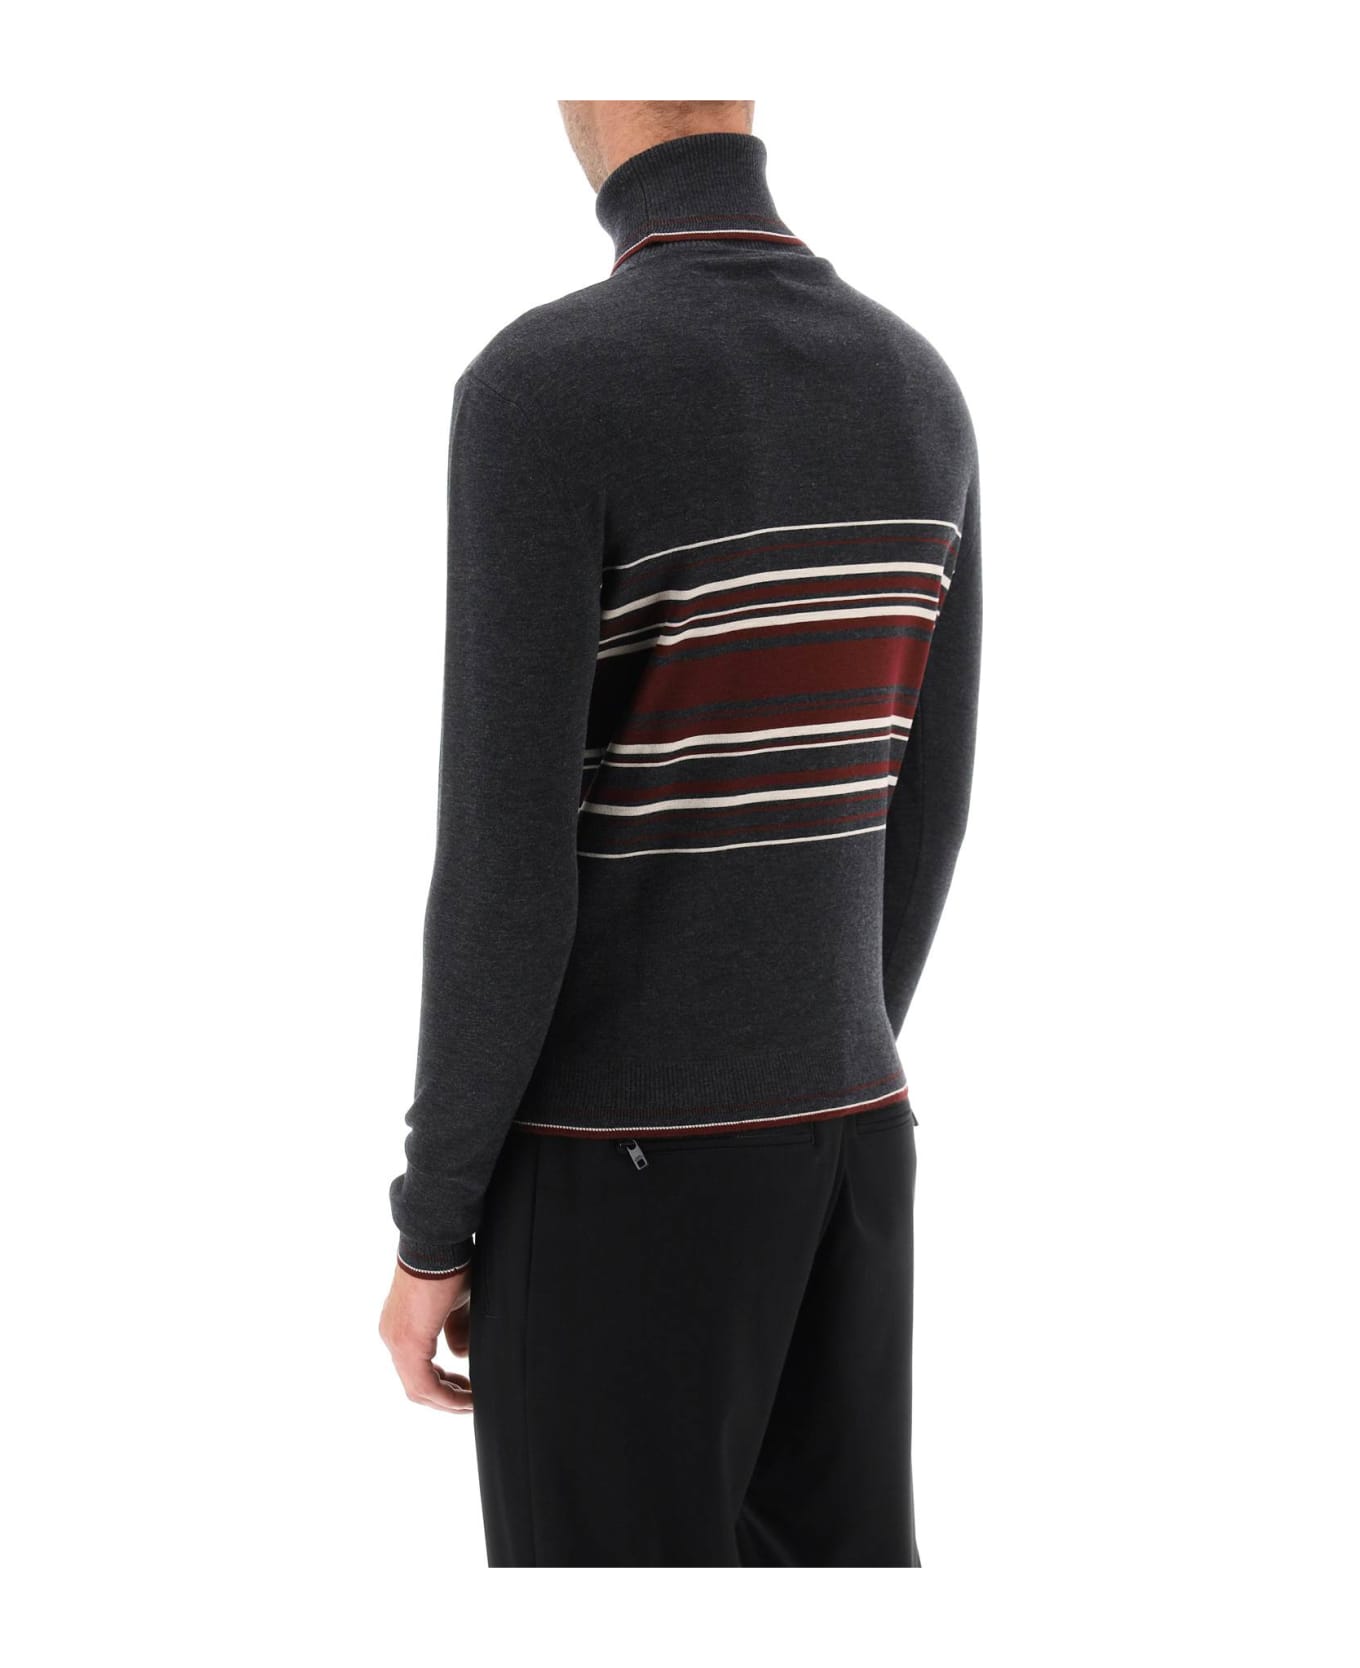 Dolce & Gabbana Striped Turtleneck Sweater - Variante Abbinata ニットウェア